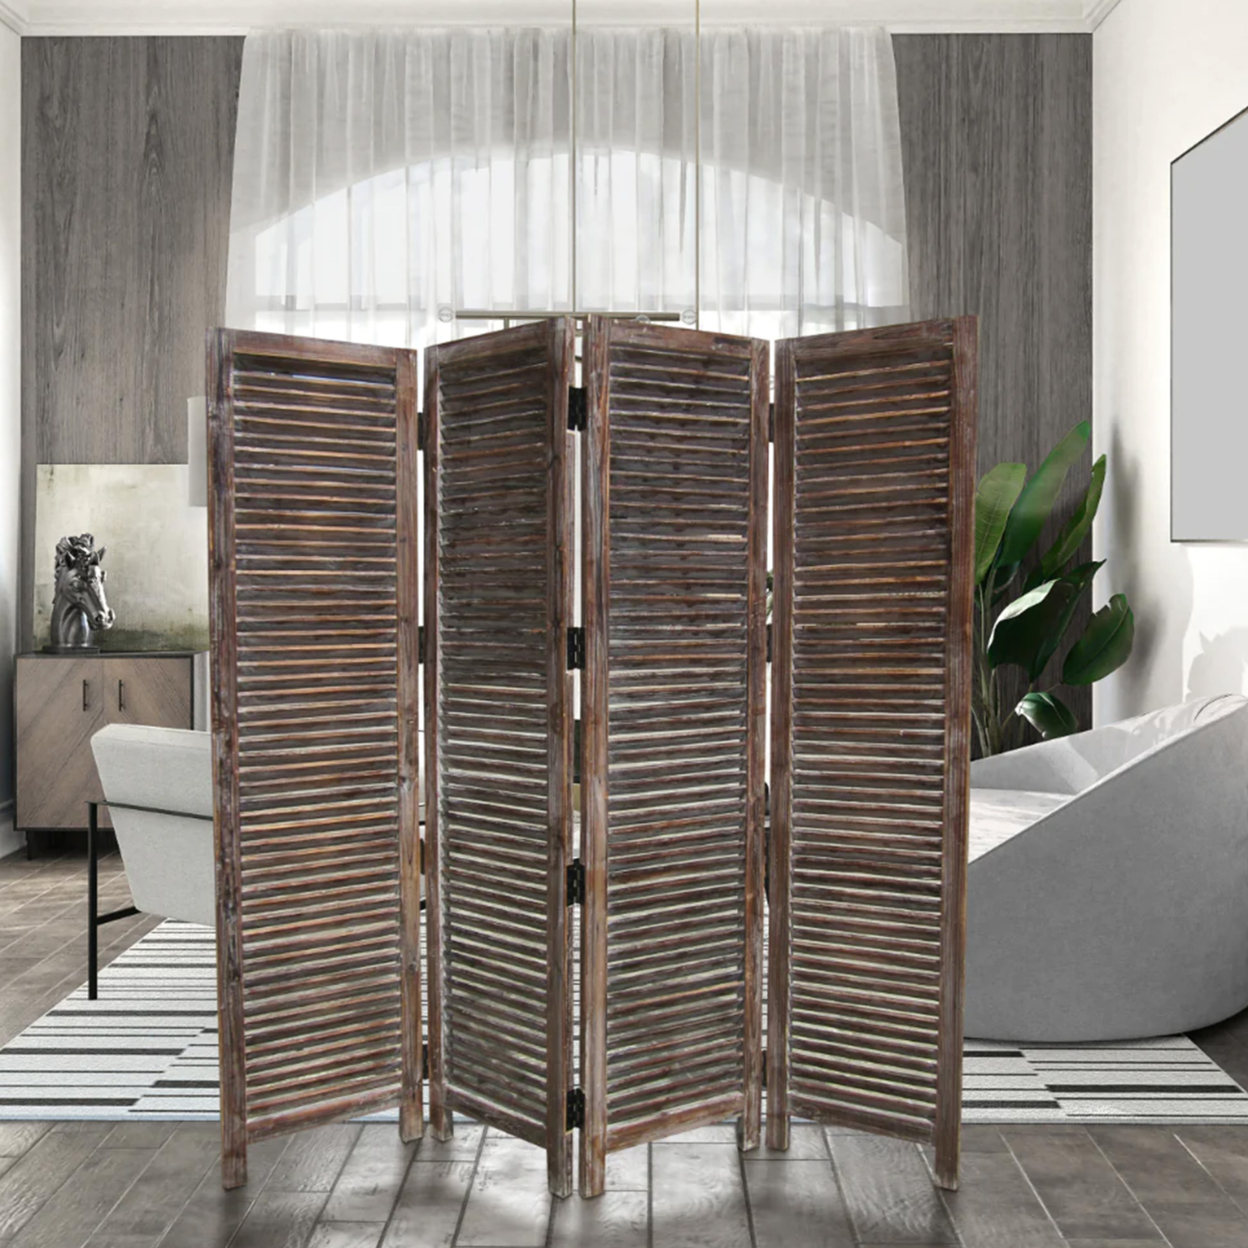 4 Panel Room Divider With Shutter Design, Weathered Brown- Saltoro Sherpi